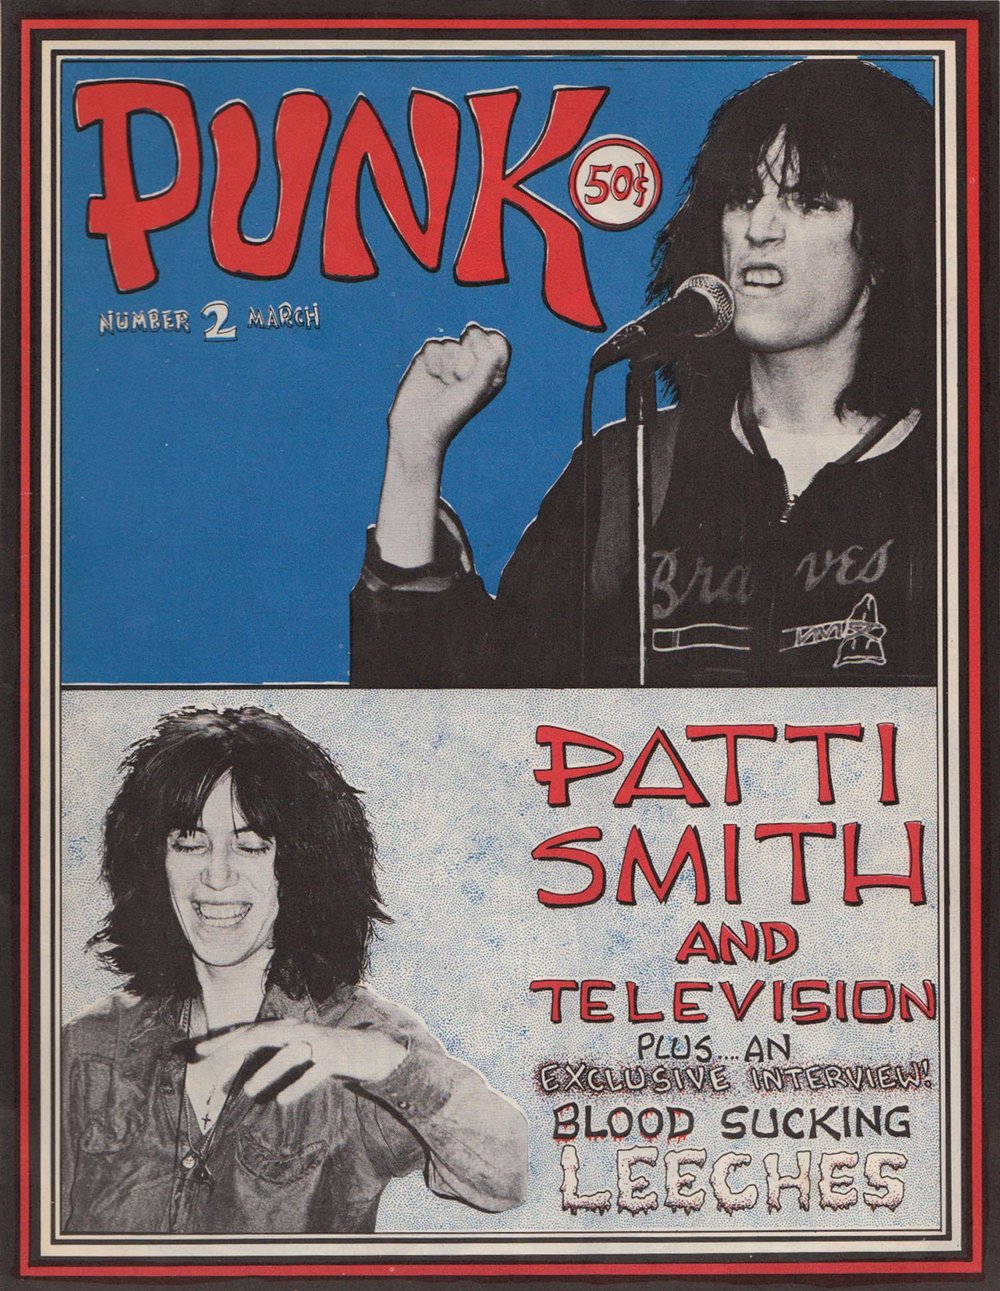 Punk Magazine, Issue 2, March 1976